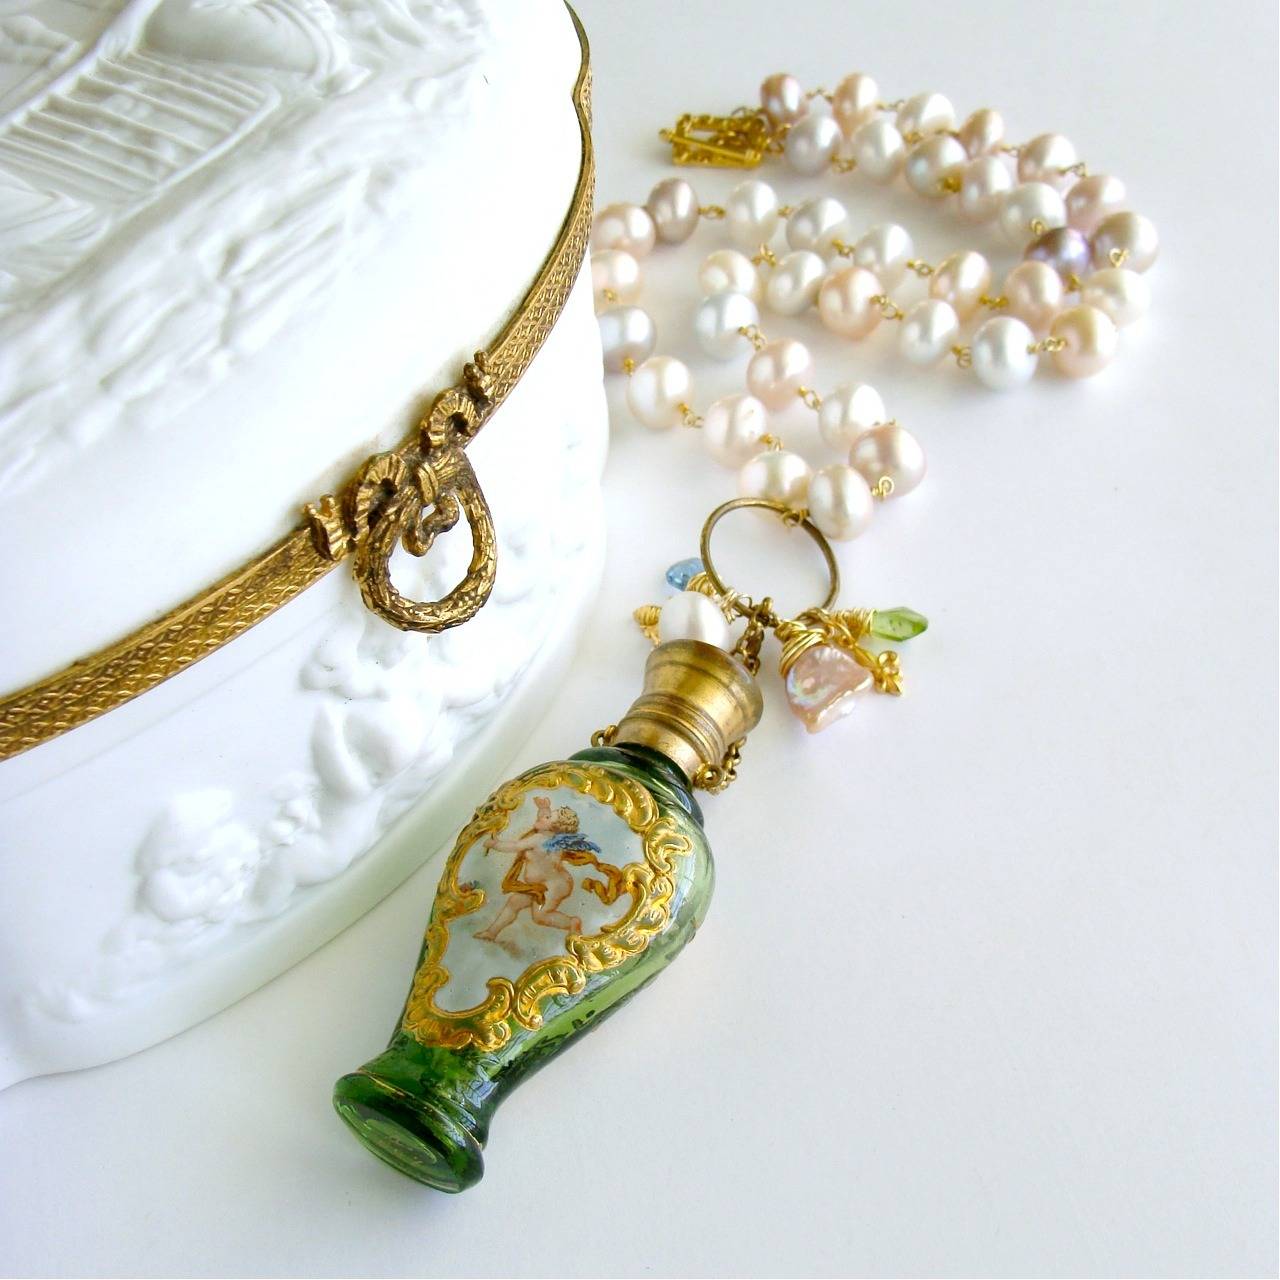 Regency Cherub Chatelaine Scent Bottle Pink Baroque Pearls Necklace